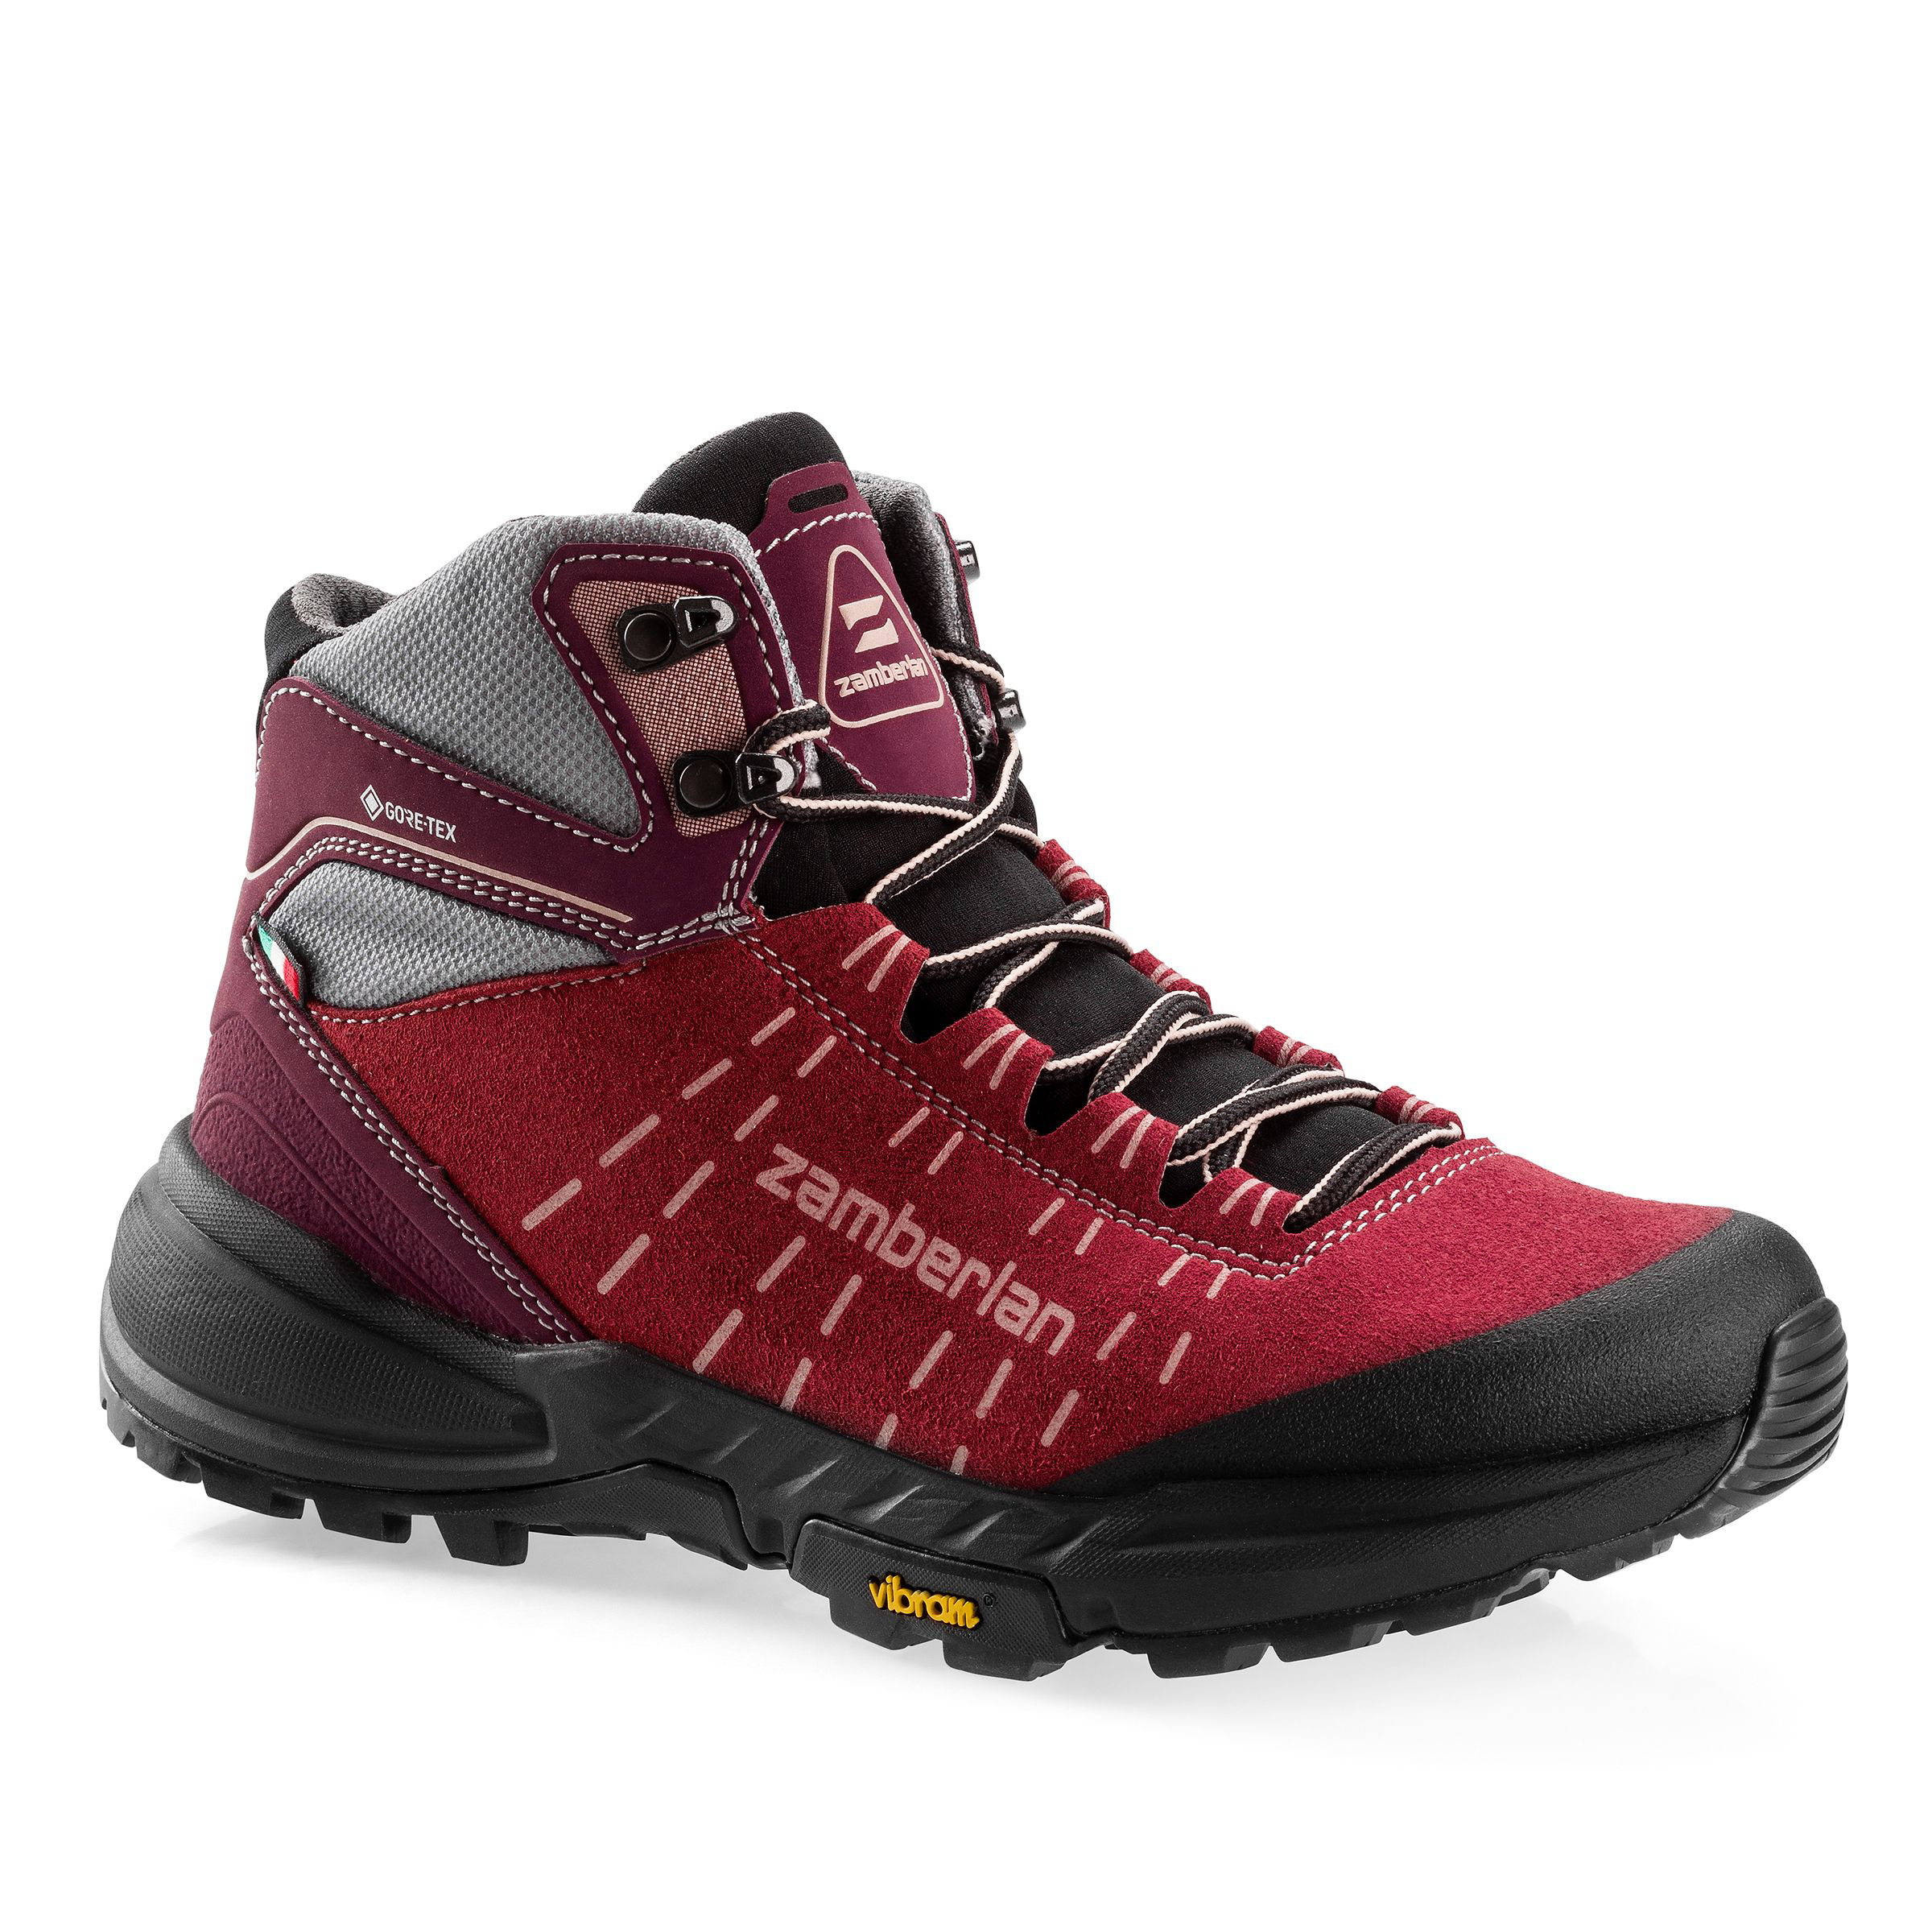 Zamberlan 334 Circe GTX Waterproof Hiking Boots for Ladies - Purple - 6M